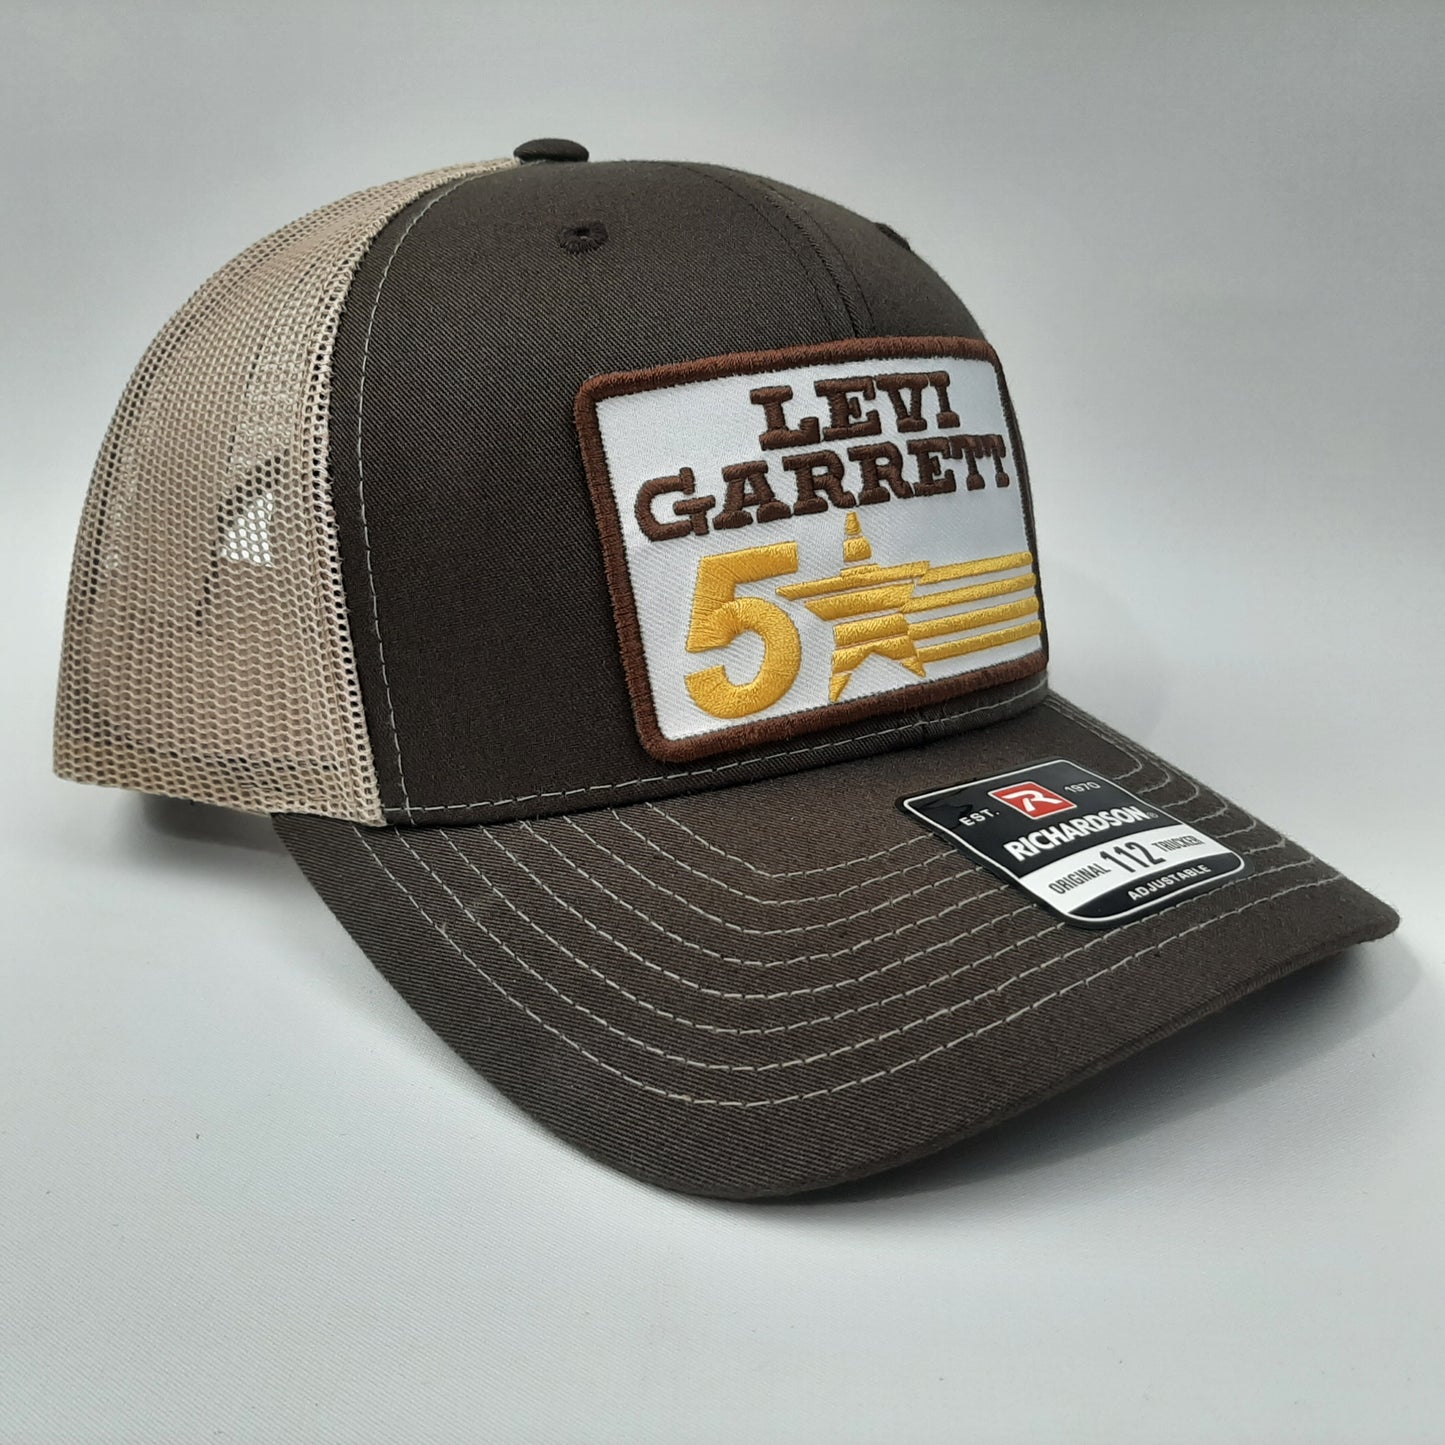 Levi Garrett Patch Richardson 112 Trucker Mesh Snapback Cap Hat Brown & Tan